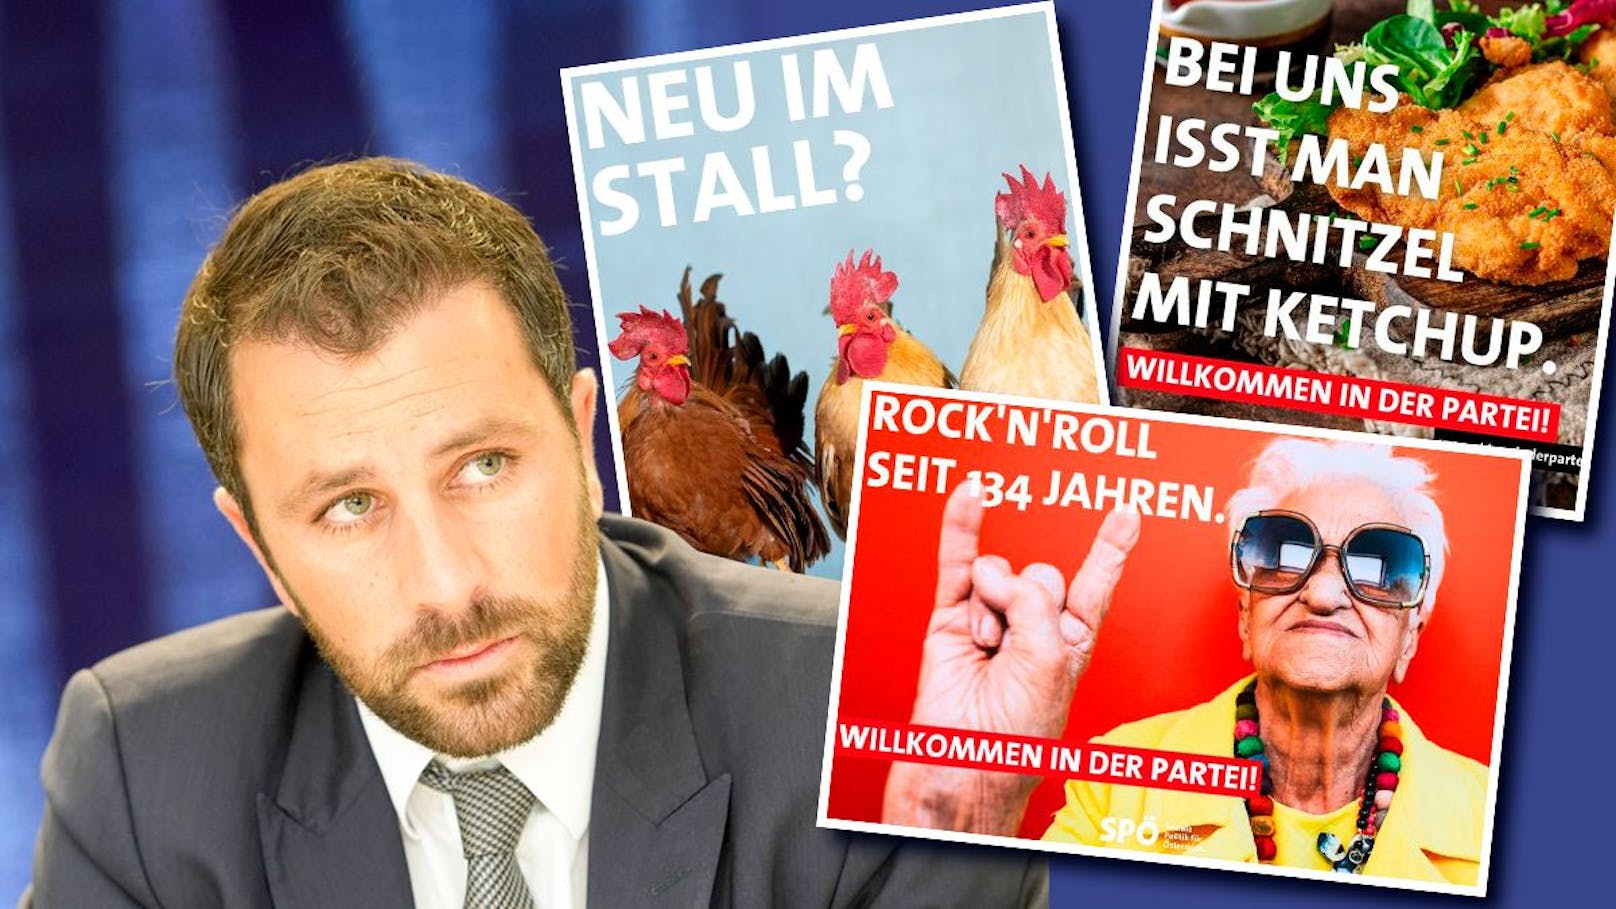 Georg Dornauer, SP-Vizelandeschef in Tirol, übt scharfe Kritik an der neuen SPÖ-Kampagne.